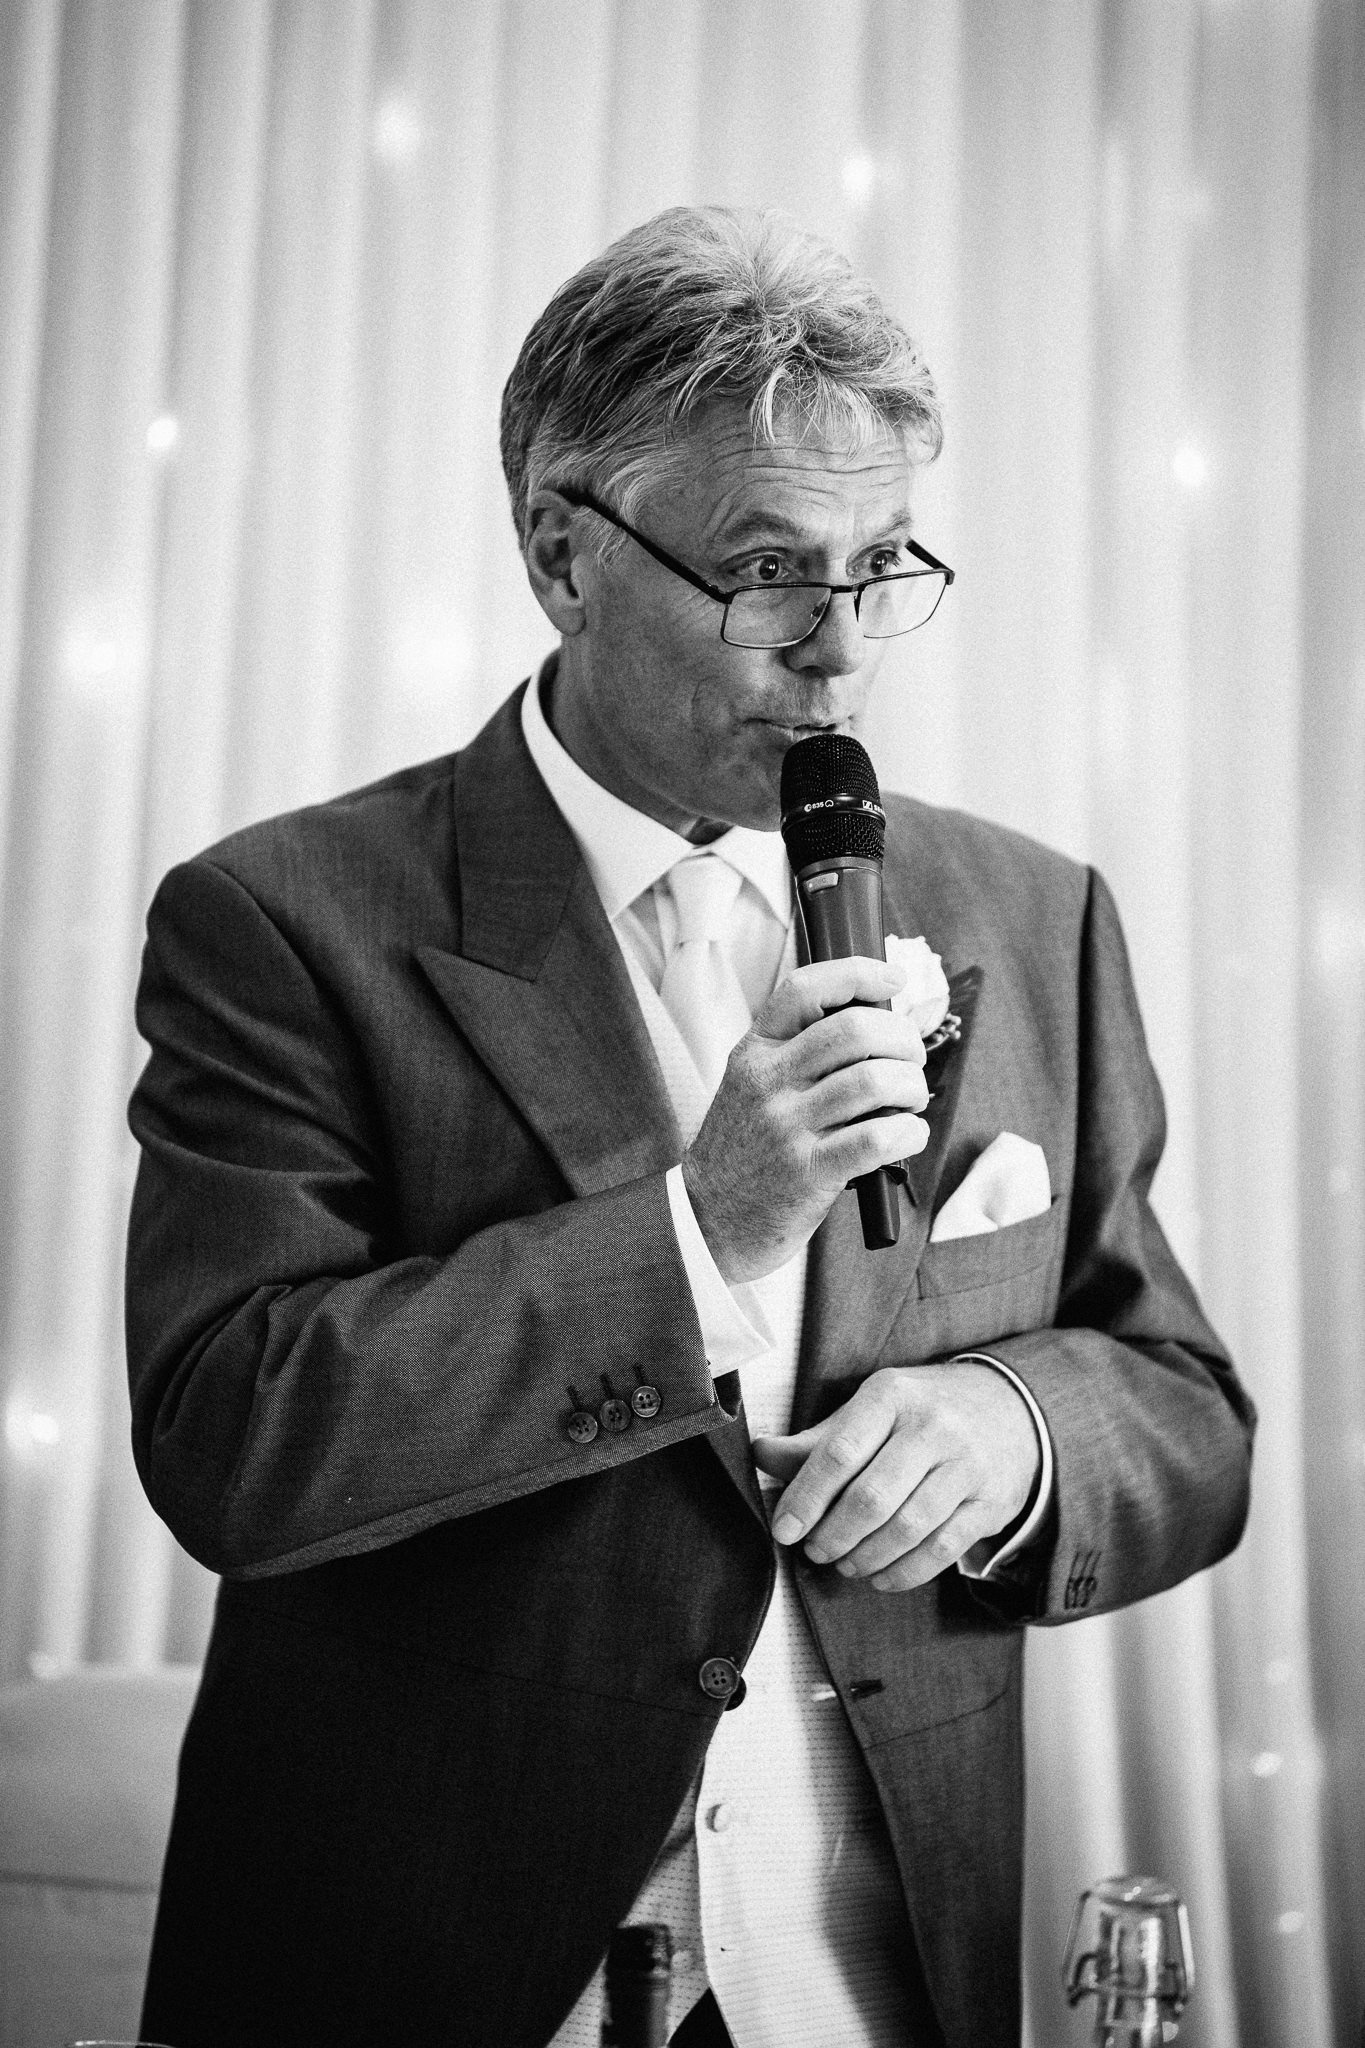  Father of the Bride makes a speech  at Walton Heath Golf Club Surrey 